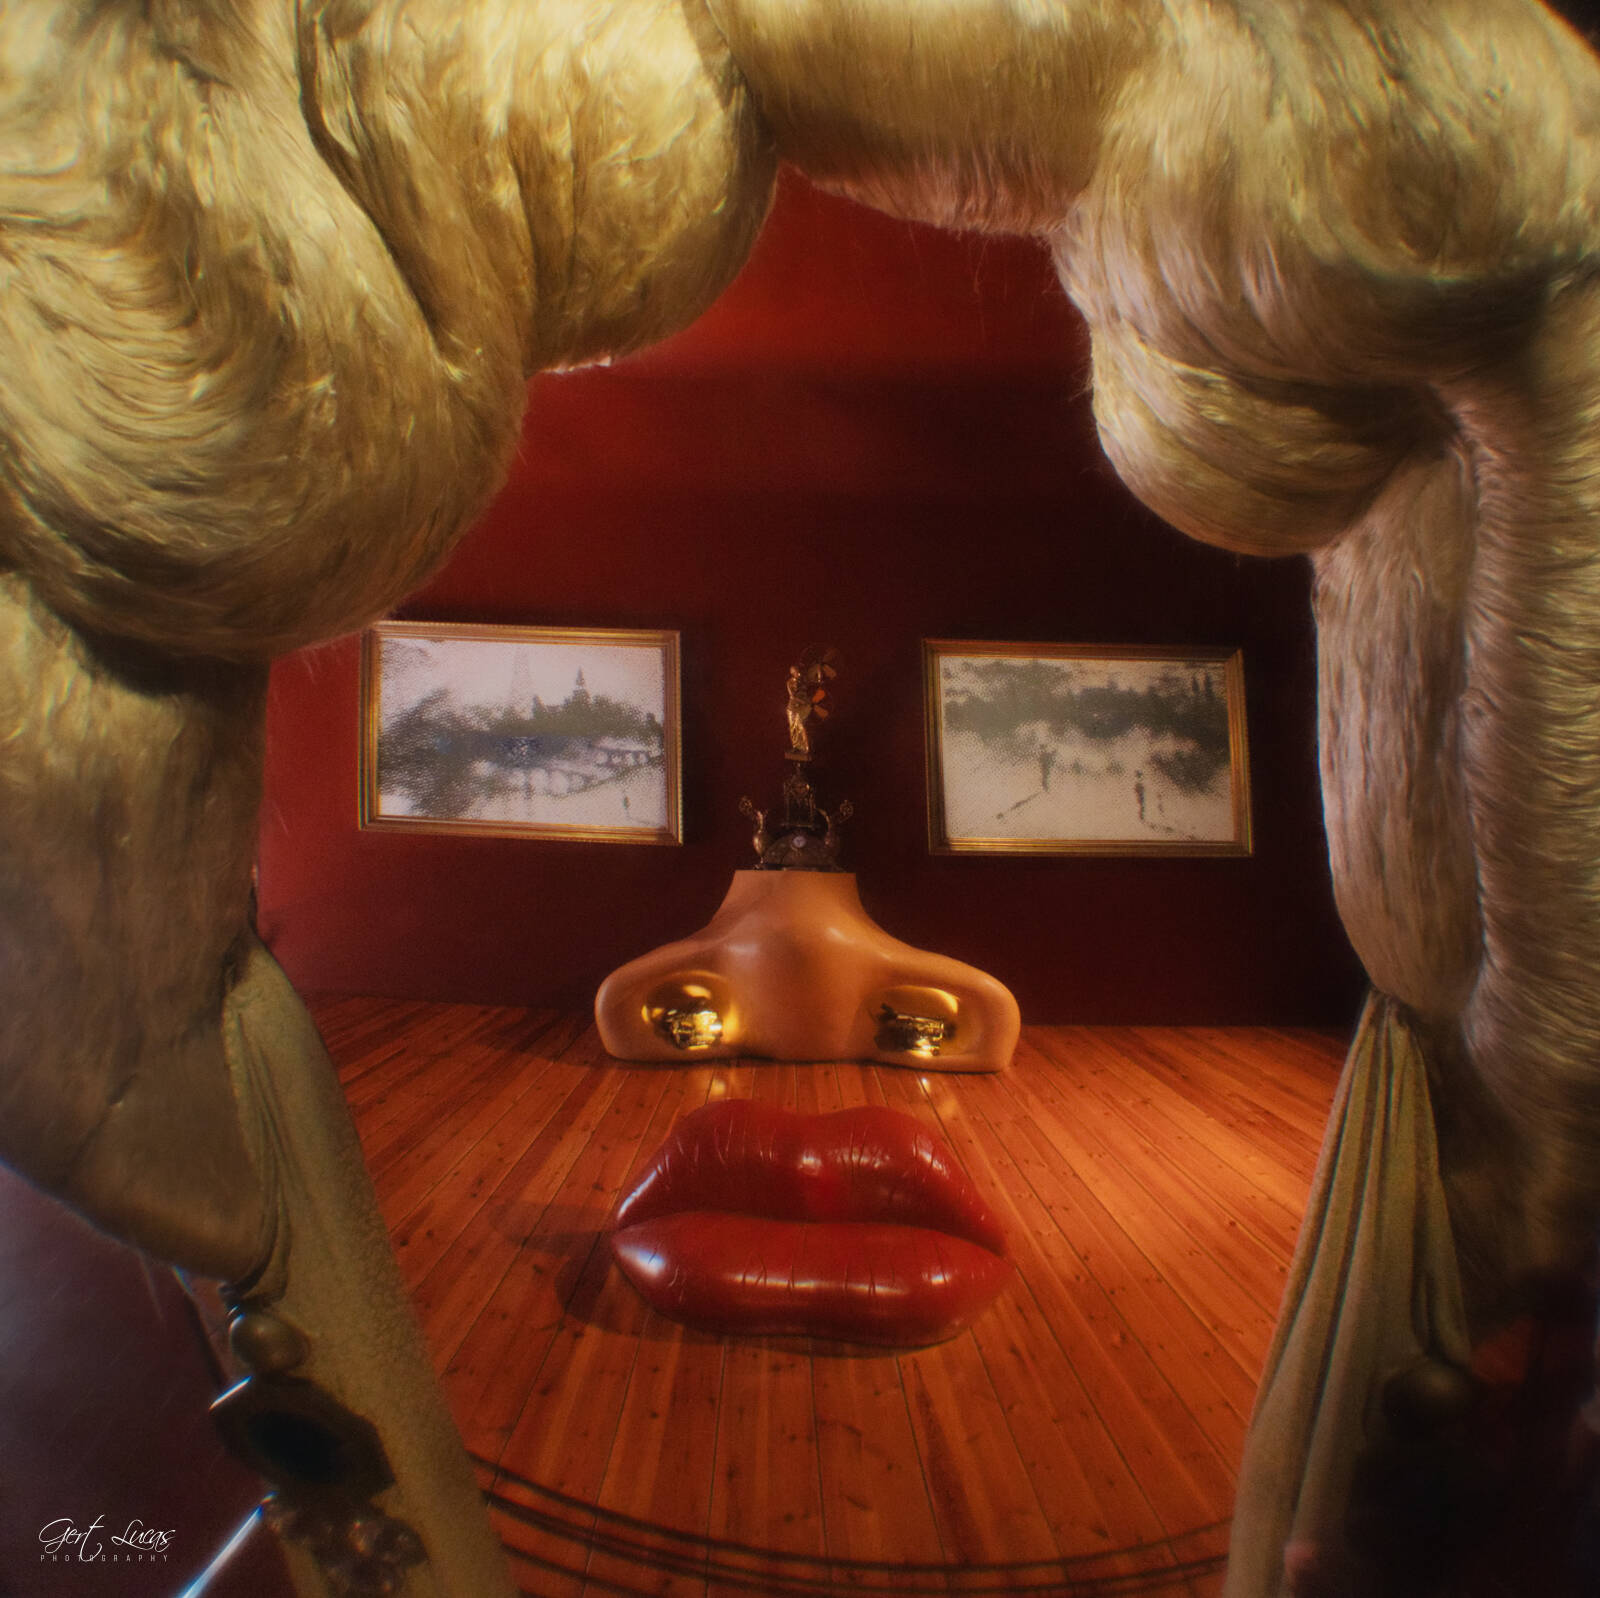 Image of Teatre-Museu Dalí by Gert Lucas